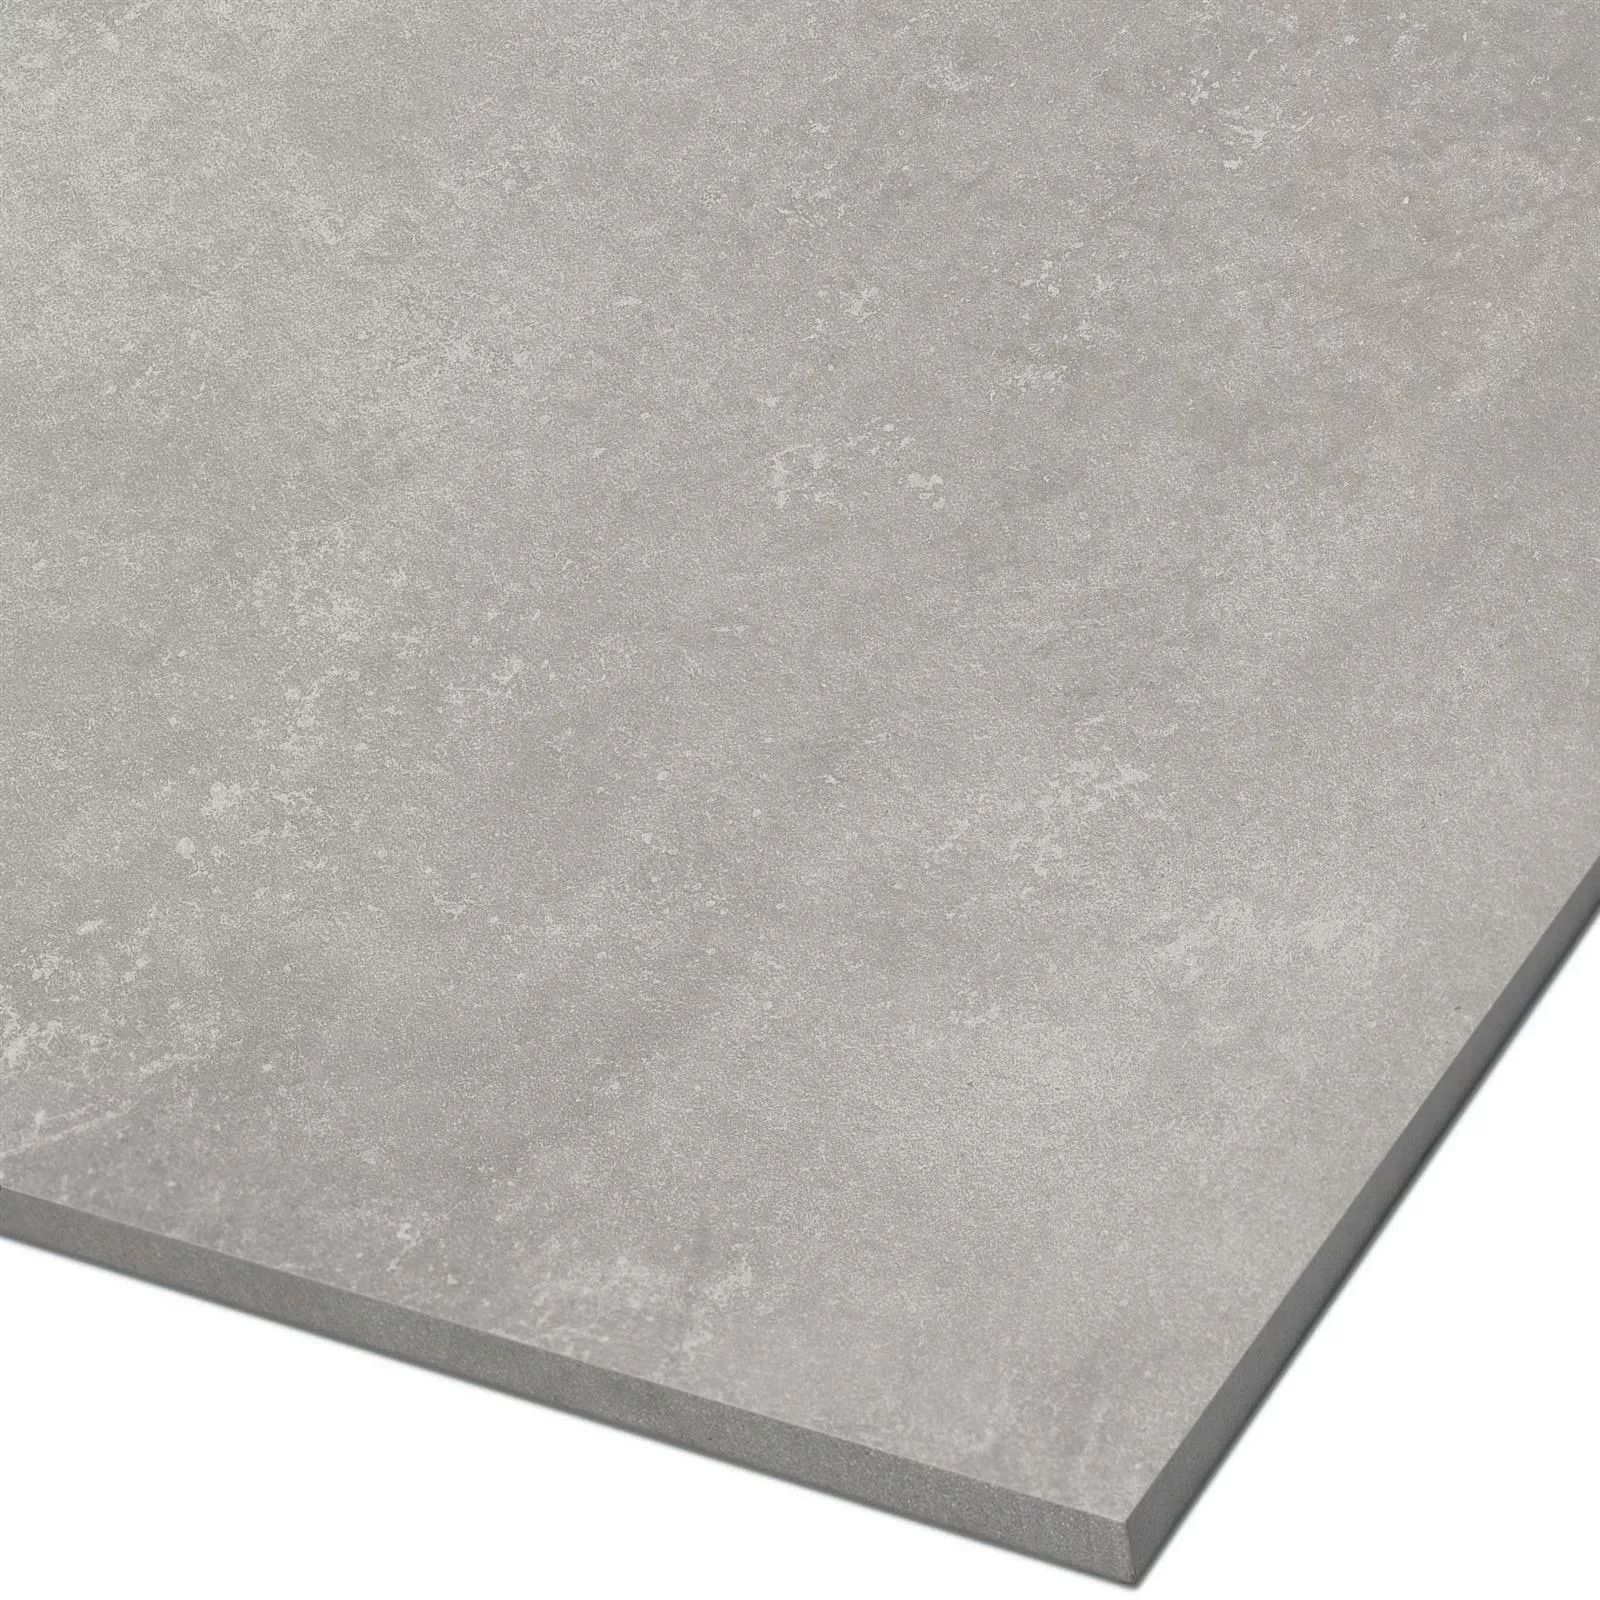 Sample Vloertegels Cement Optic Nepal Slim Grijs 100x100cm